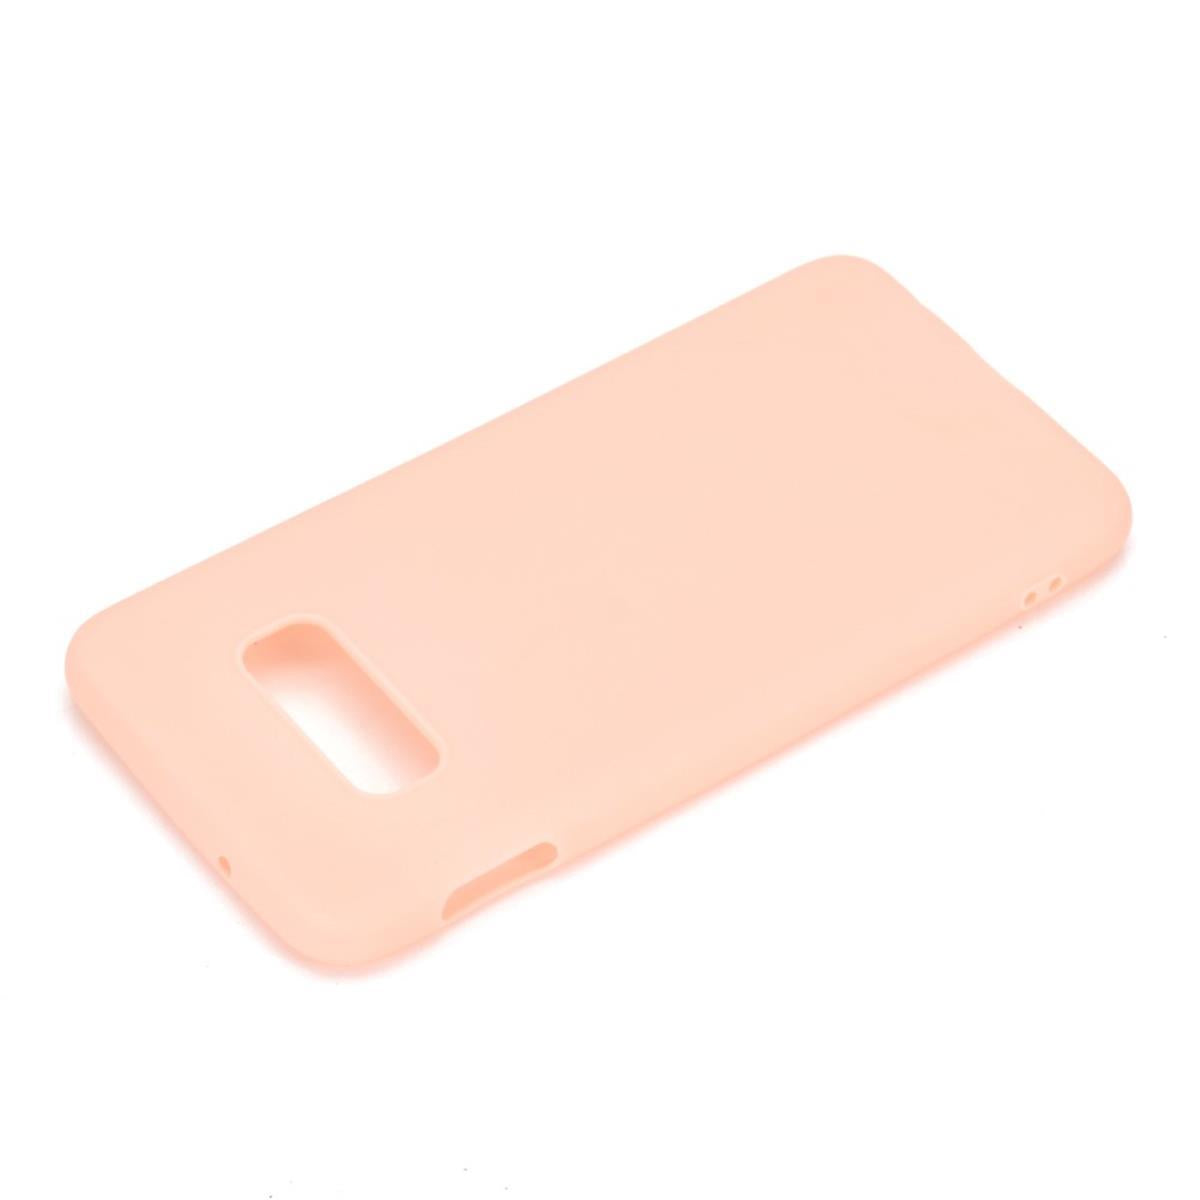 Hülle für Samsung Galaxy S10e Handyhülle Silikon Case Schutzhülle matt Rosa